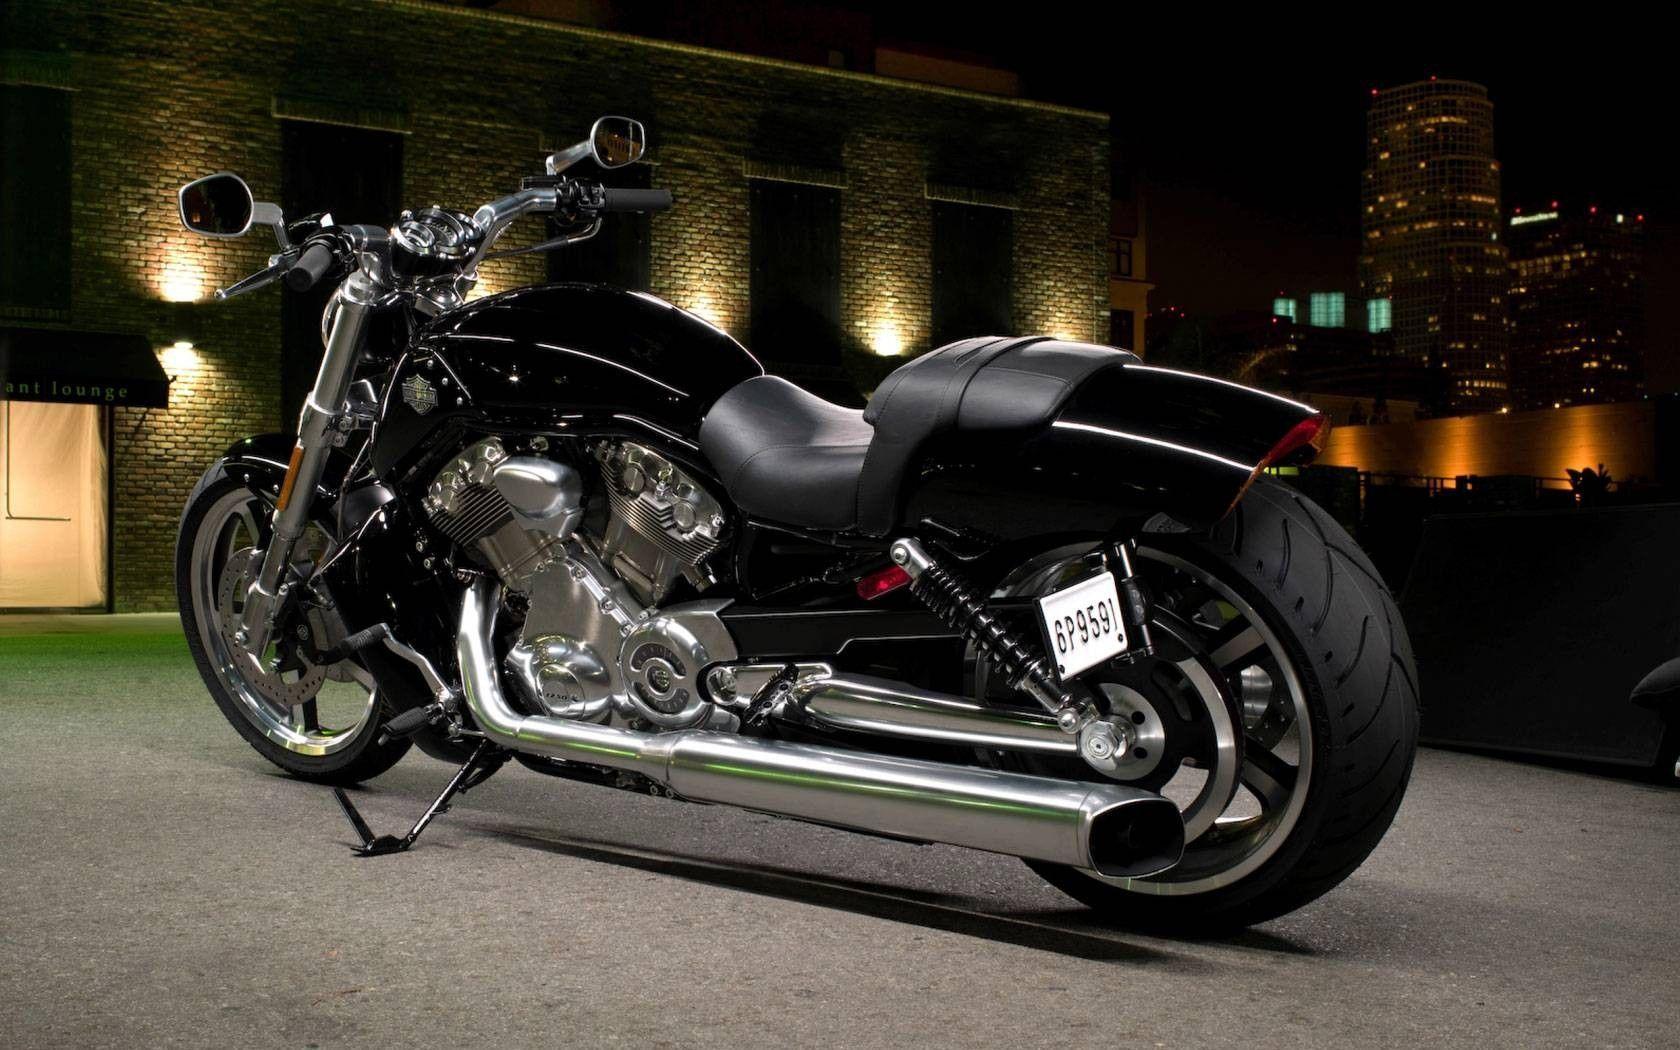 Harley Davidson Bikes Wallpapers Download 12104 Full HD Wallpapers